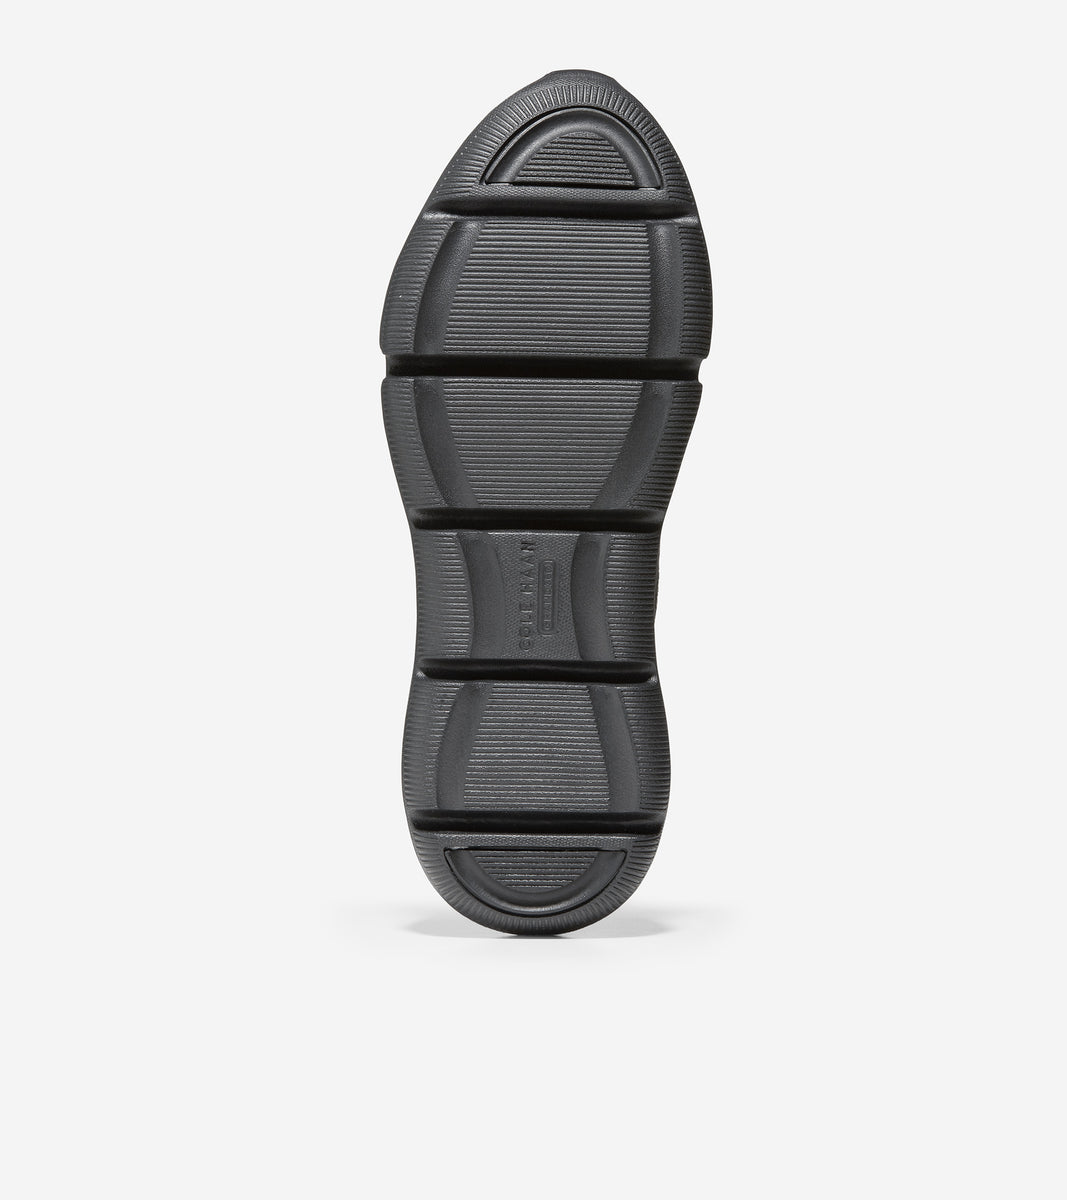 ColeHaan-ZERØGRAND Radiant Slip-On Sneaker-w24060-Black / Black / Charcoal